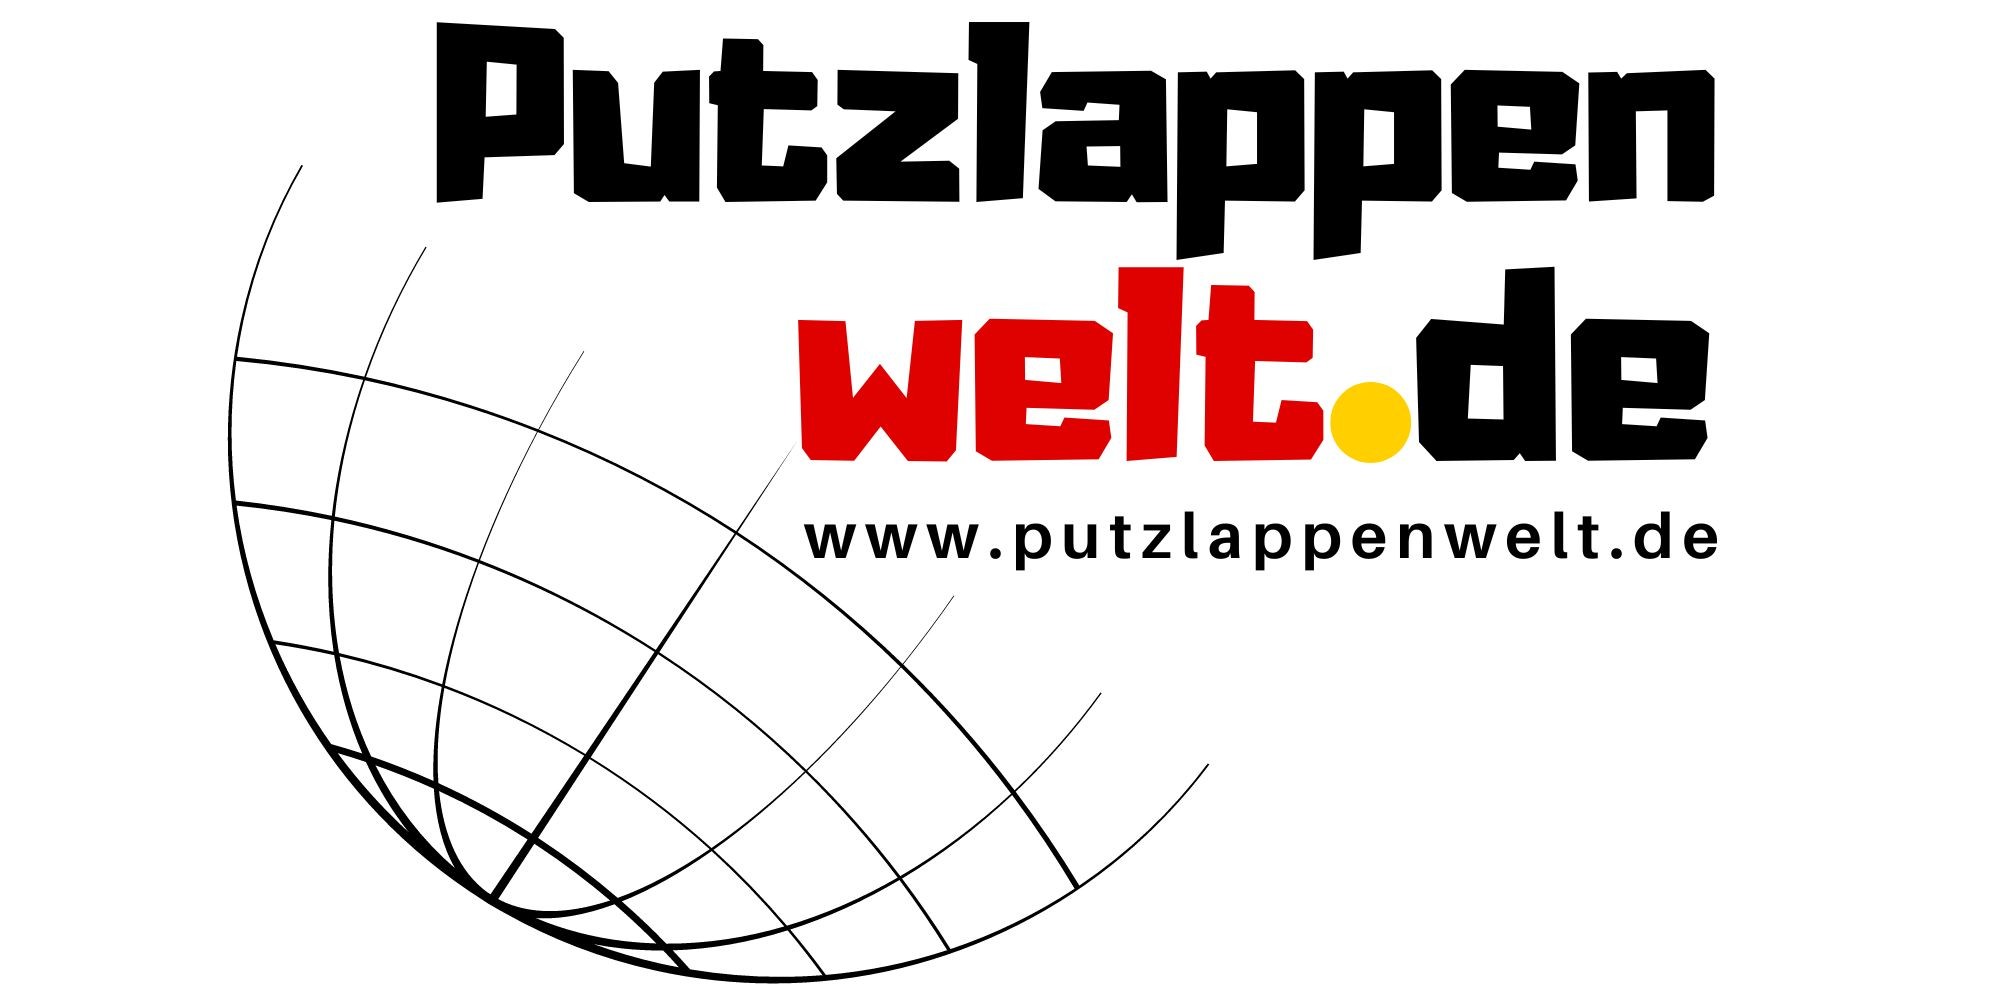 https://www.putzlappenwelt.de/img/prestashop-logo-1671300197.jpg